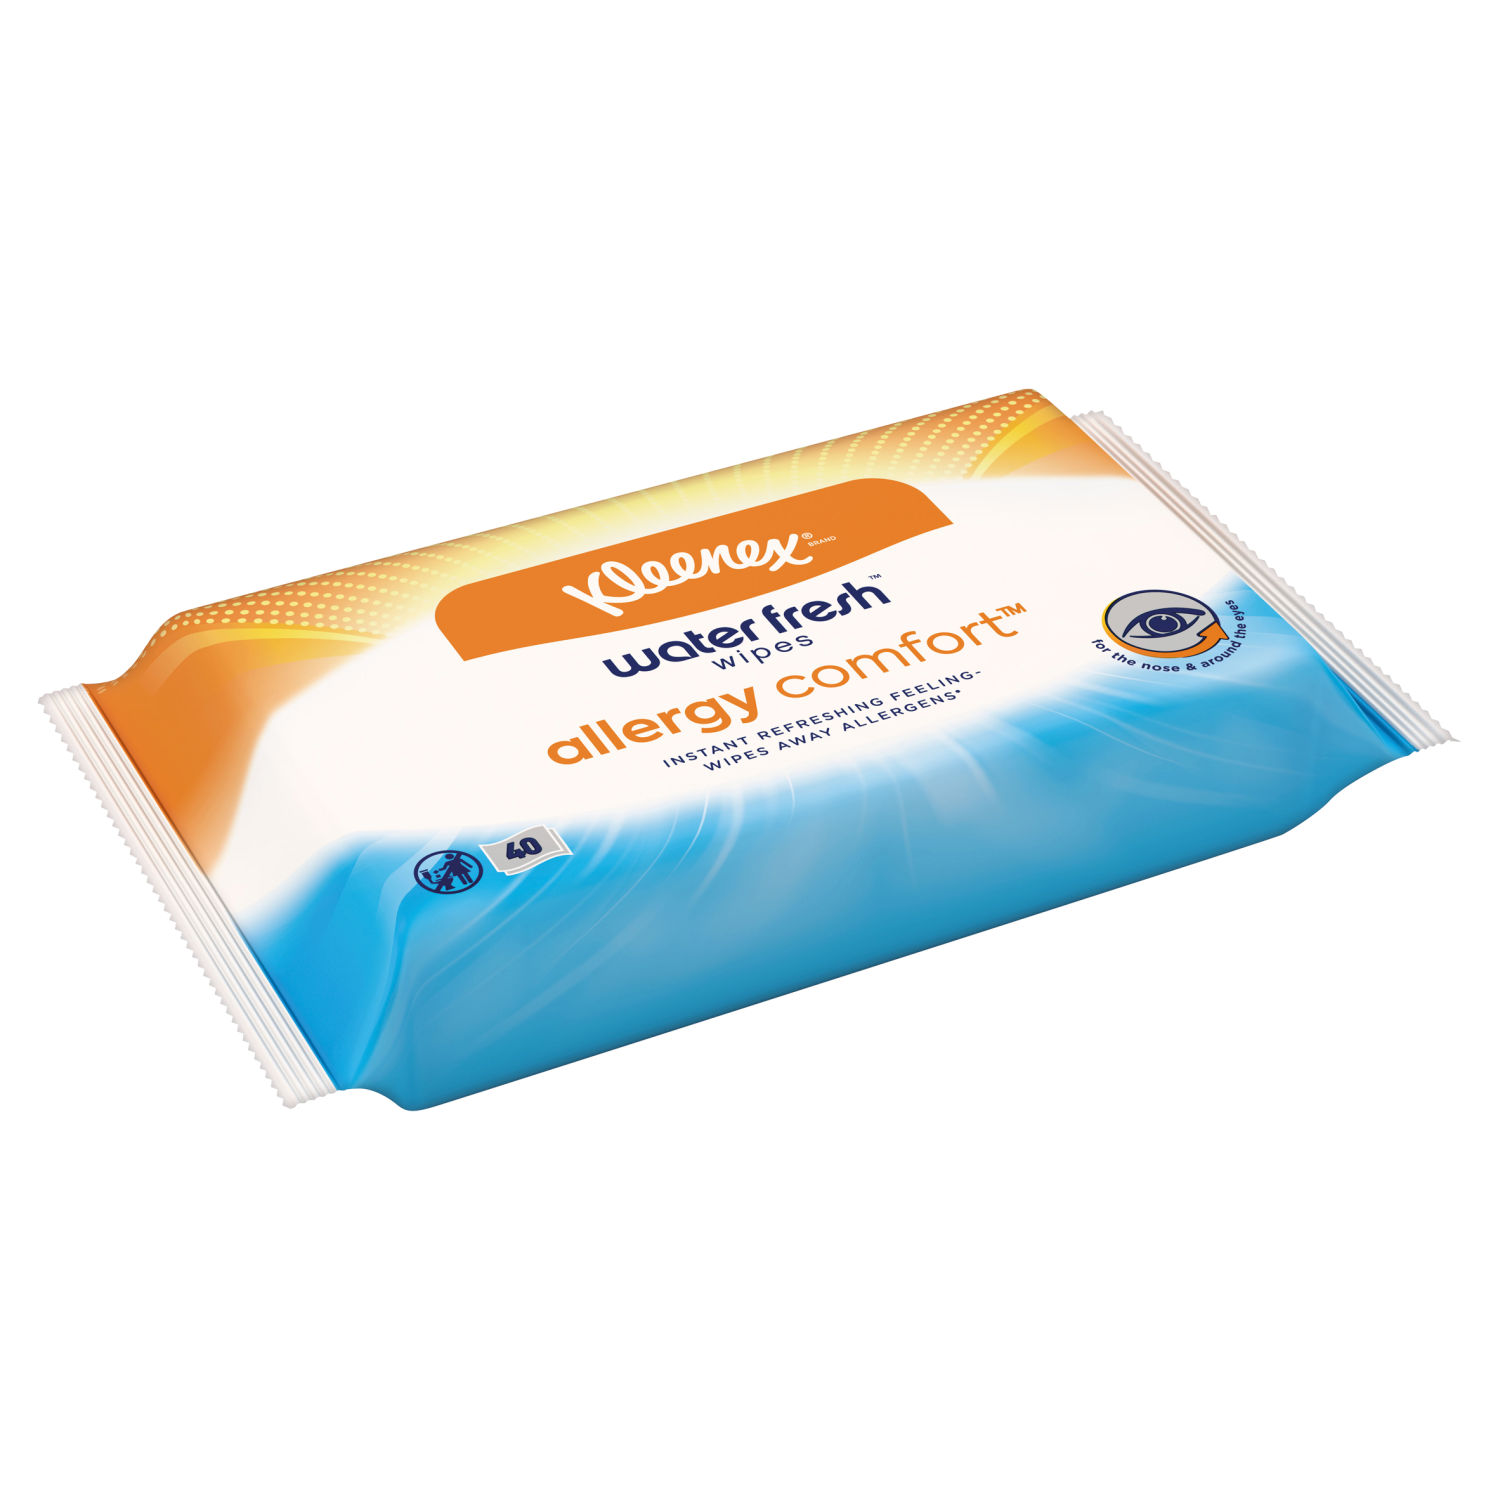 Kleenex® Water Fresh™ Wipes Allergy Comfort™ 40 Wipes